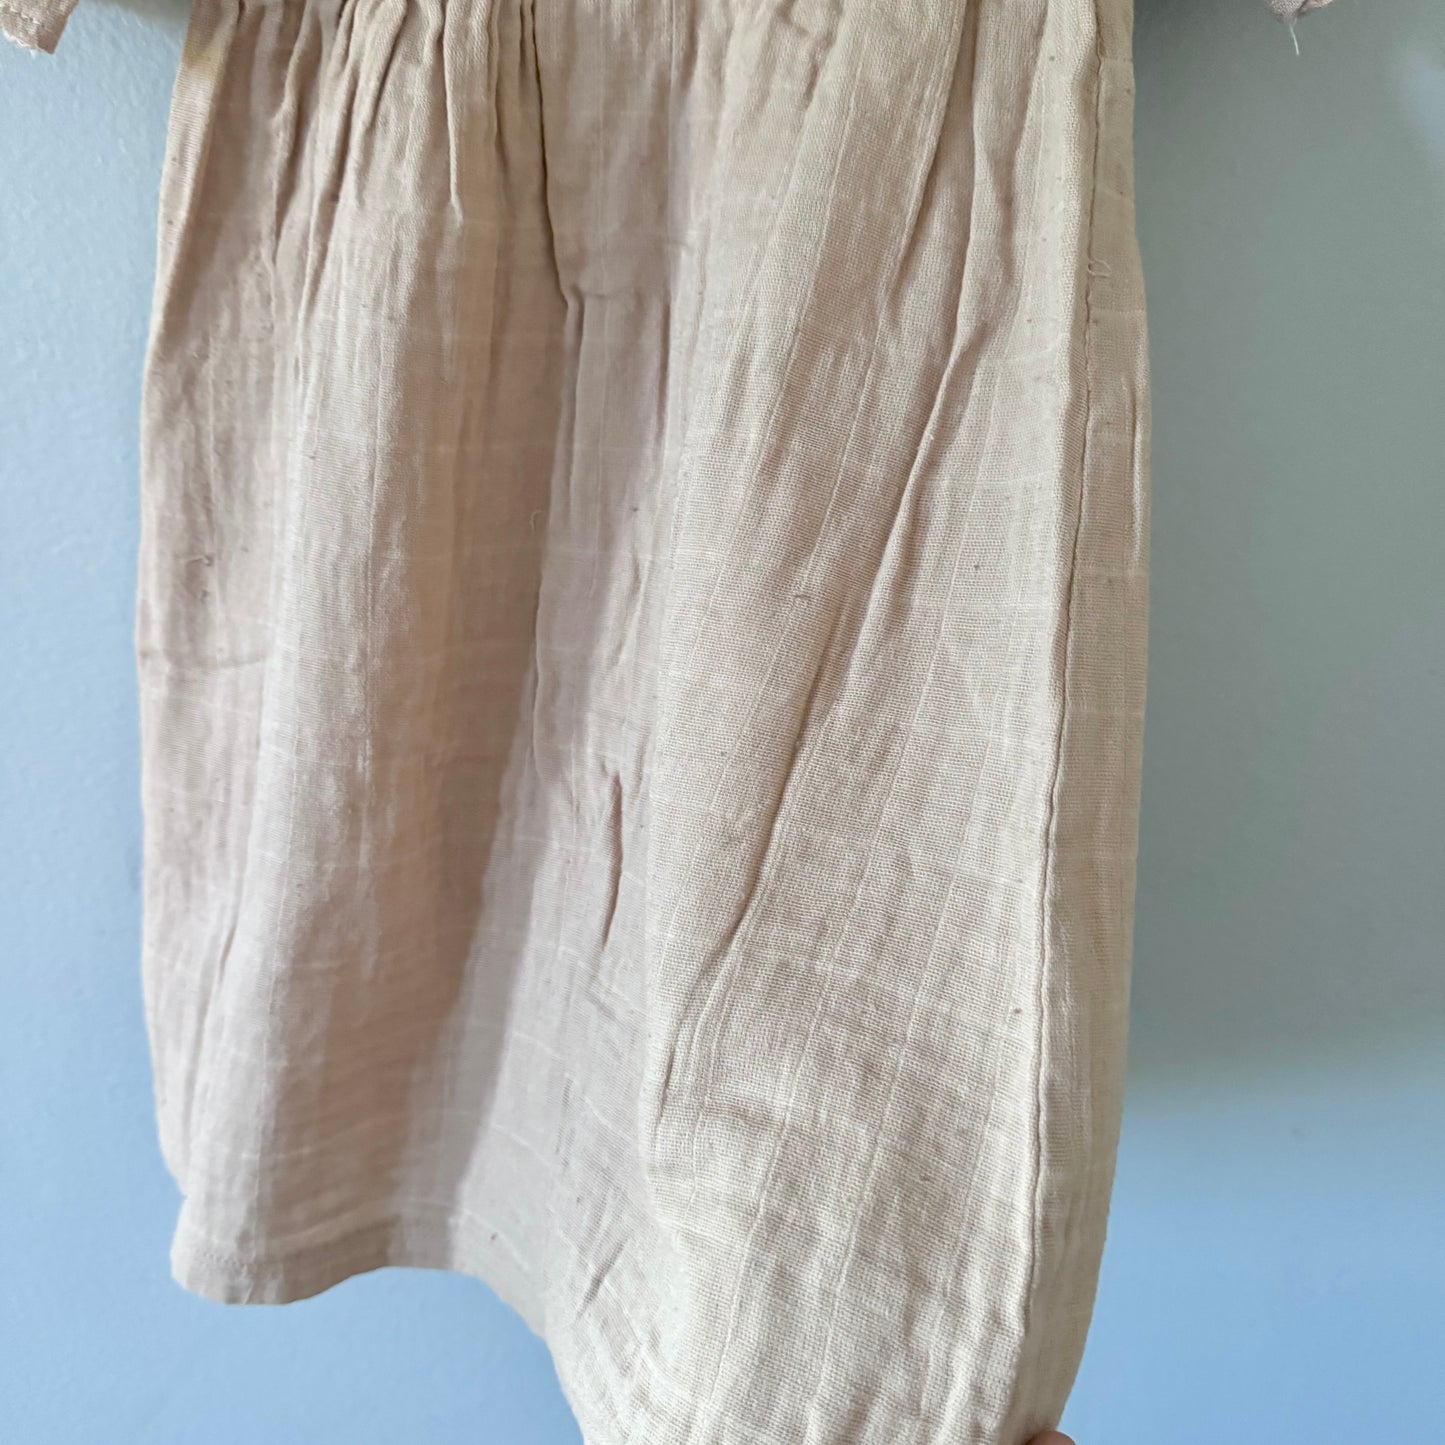 B Organic  / Brown muslin cotton dress / 2Y